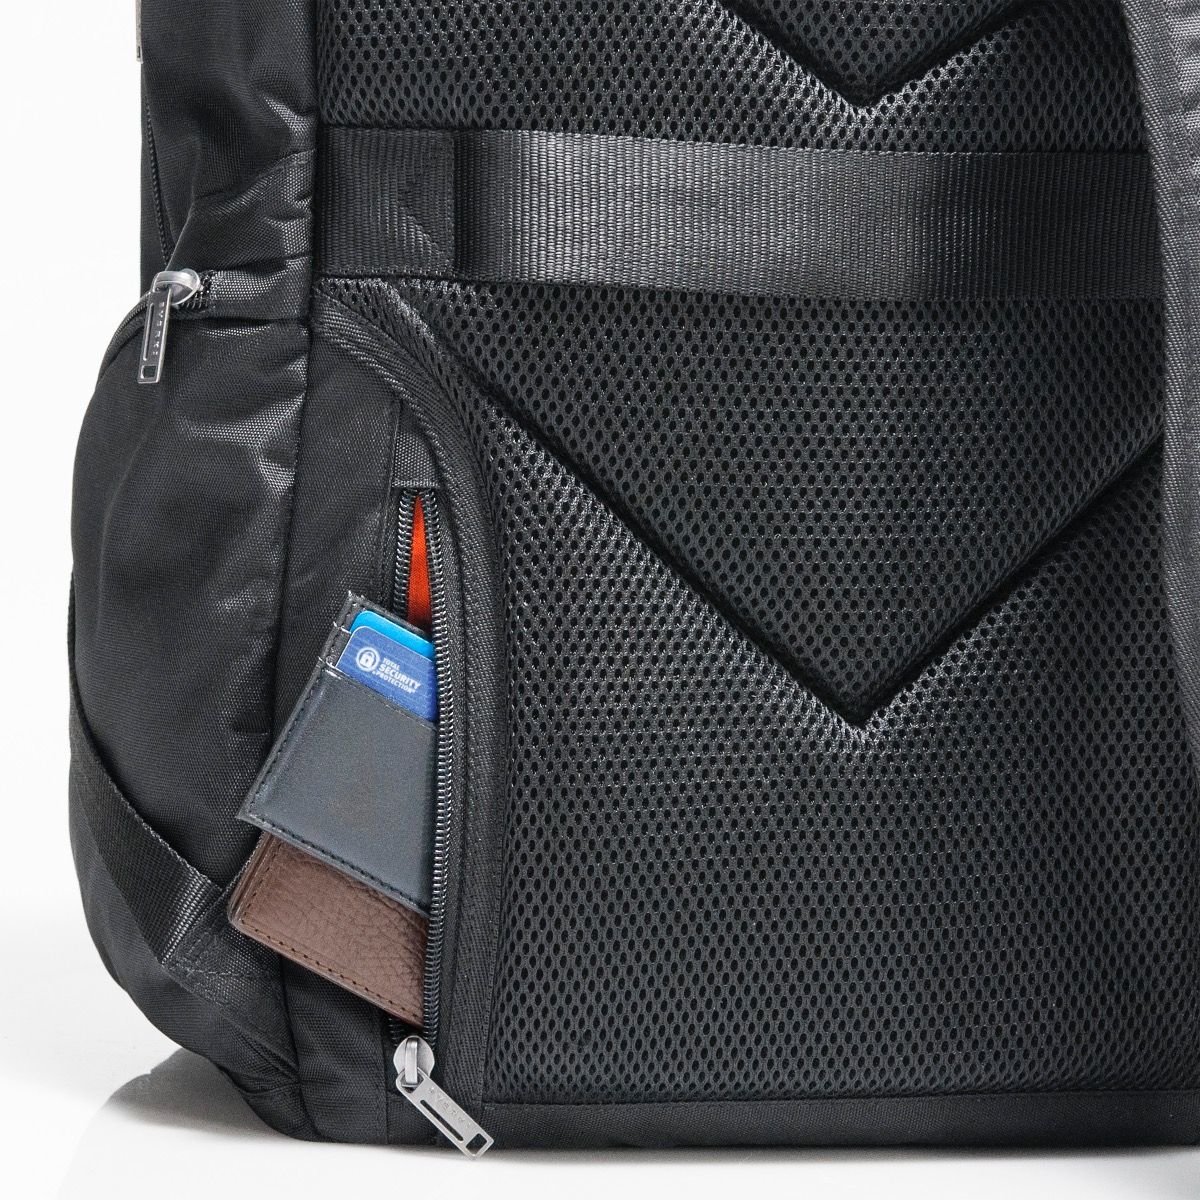 Рюкзак для ноутбука 15.6 Everki Advance Laptop Backpack Black